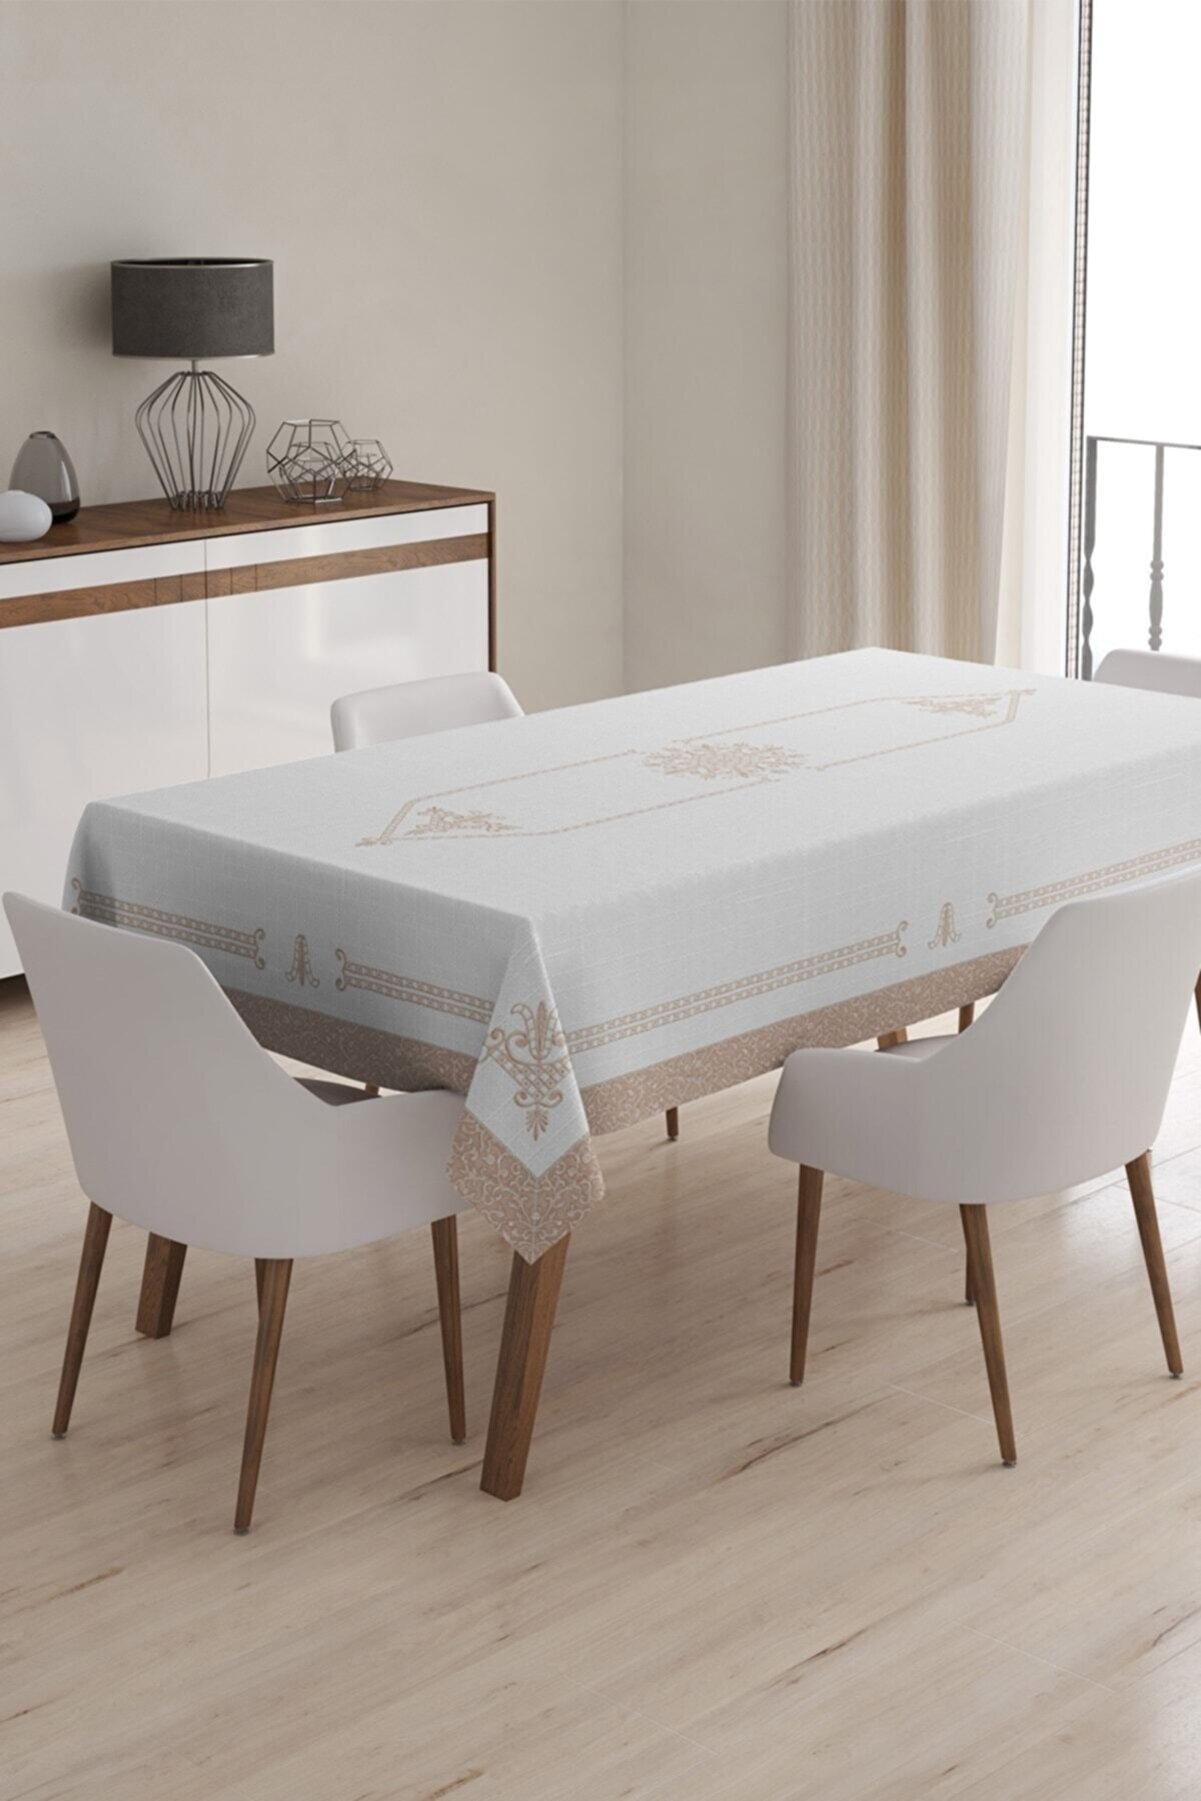 Custom Design Digital Printed Table Cloth